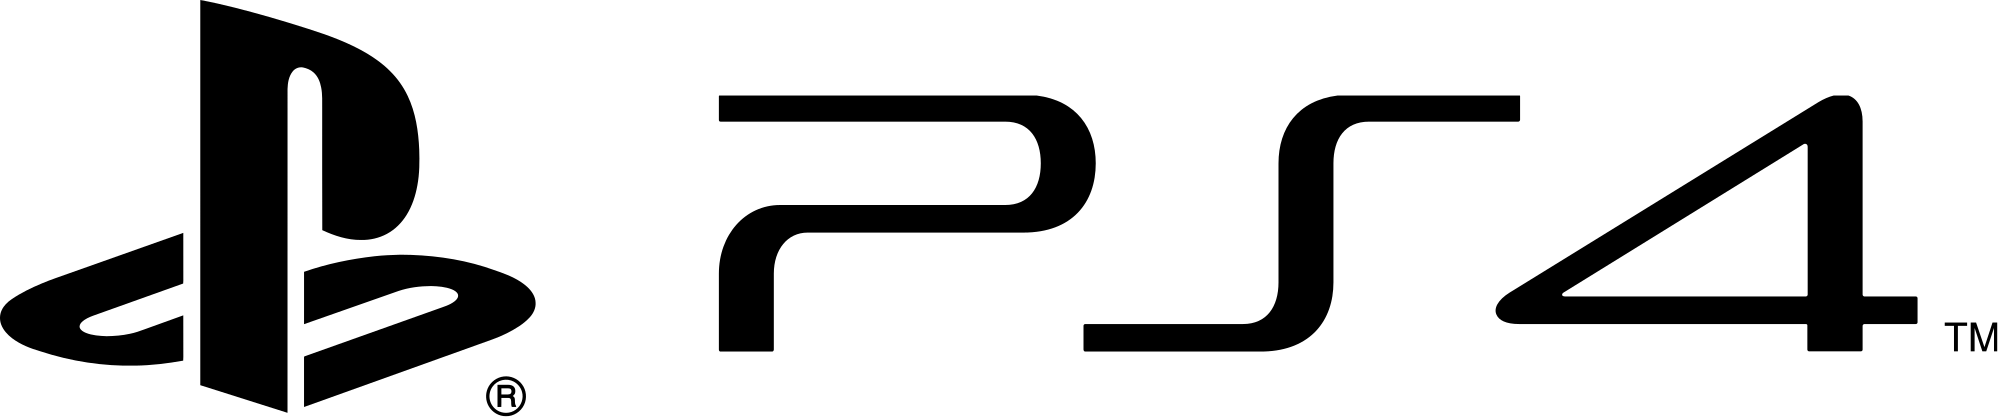 PS4 PlayStation 4 Logo - PlayStation 4 logo and wordmark.svg